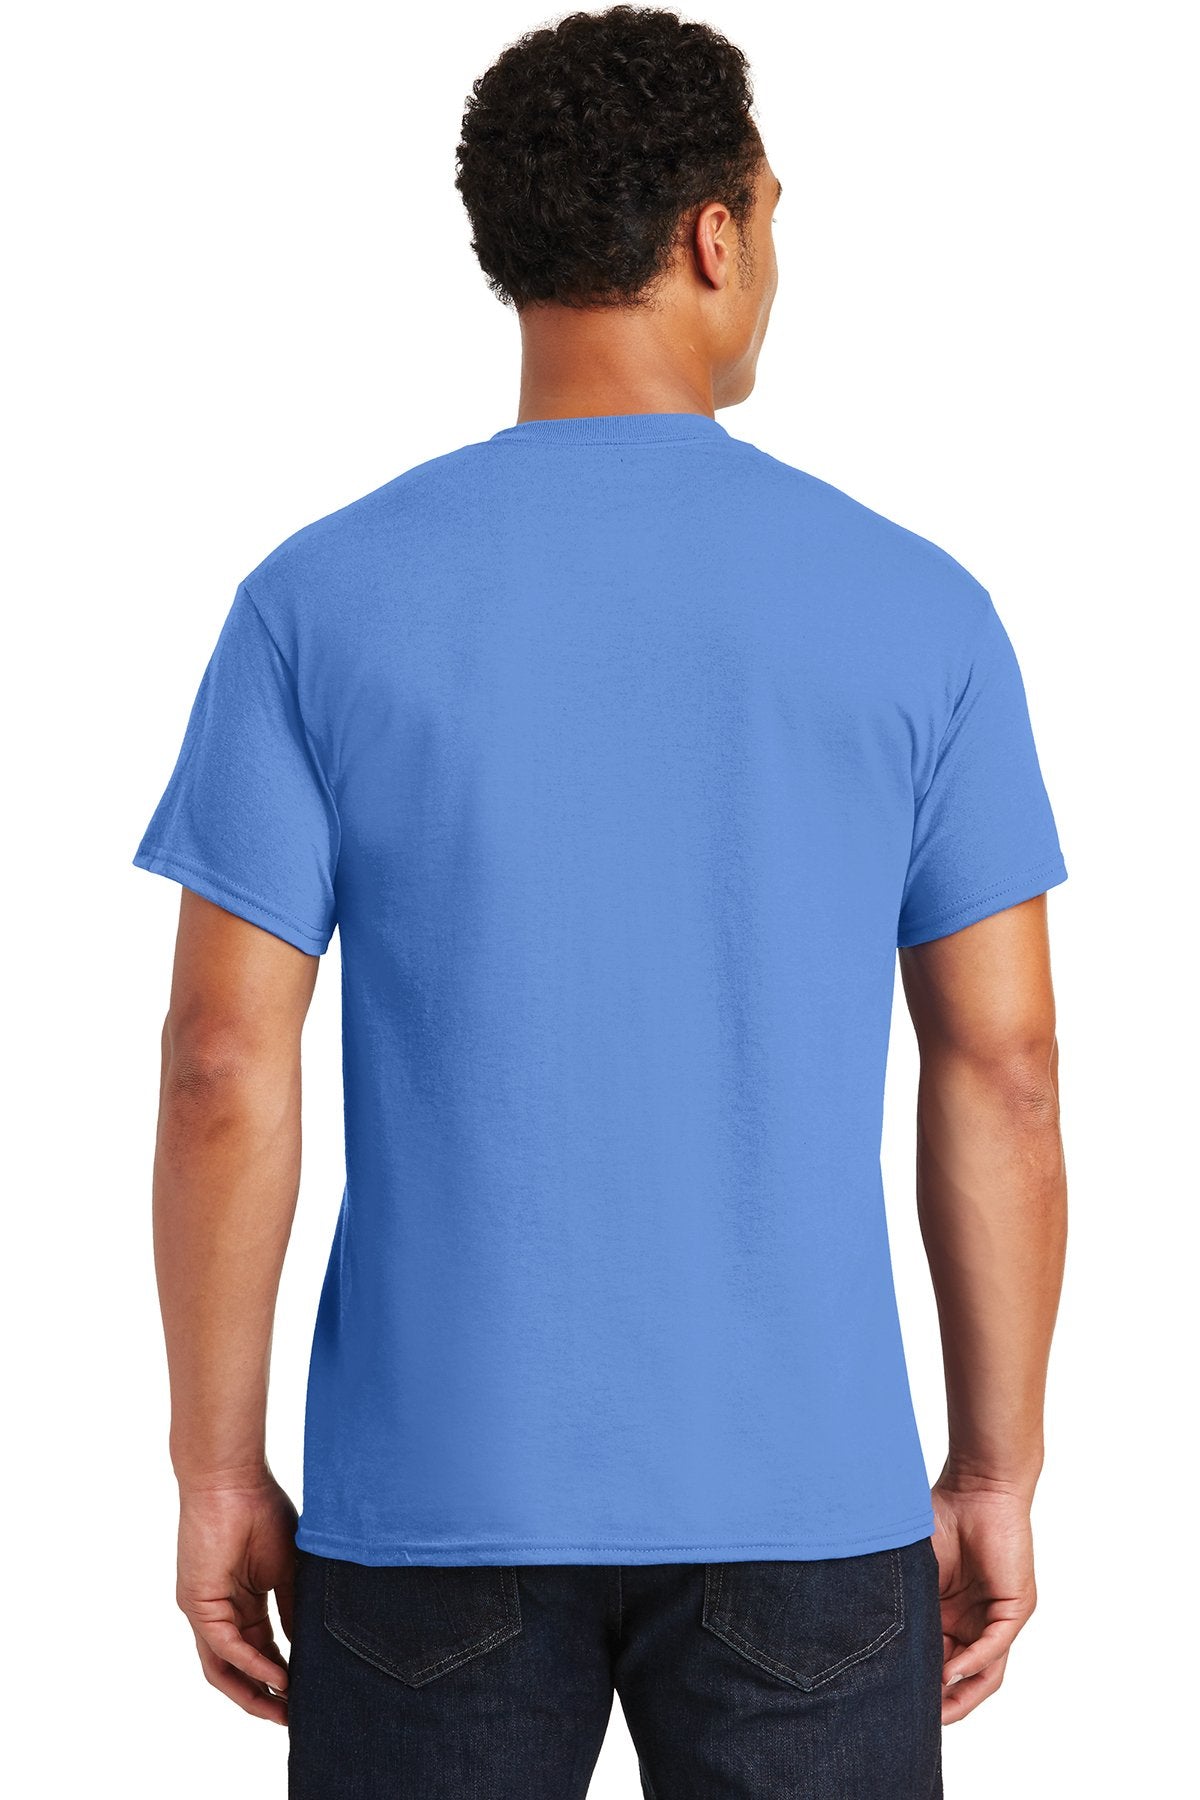 gildan dryblend cotton poly t shirt 8000 carolina blue